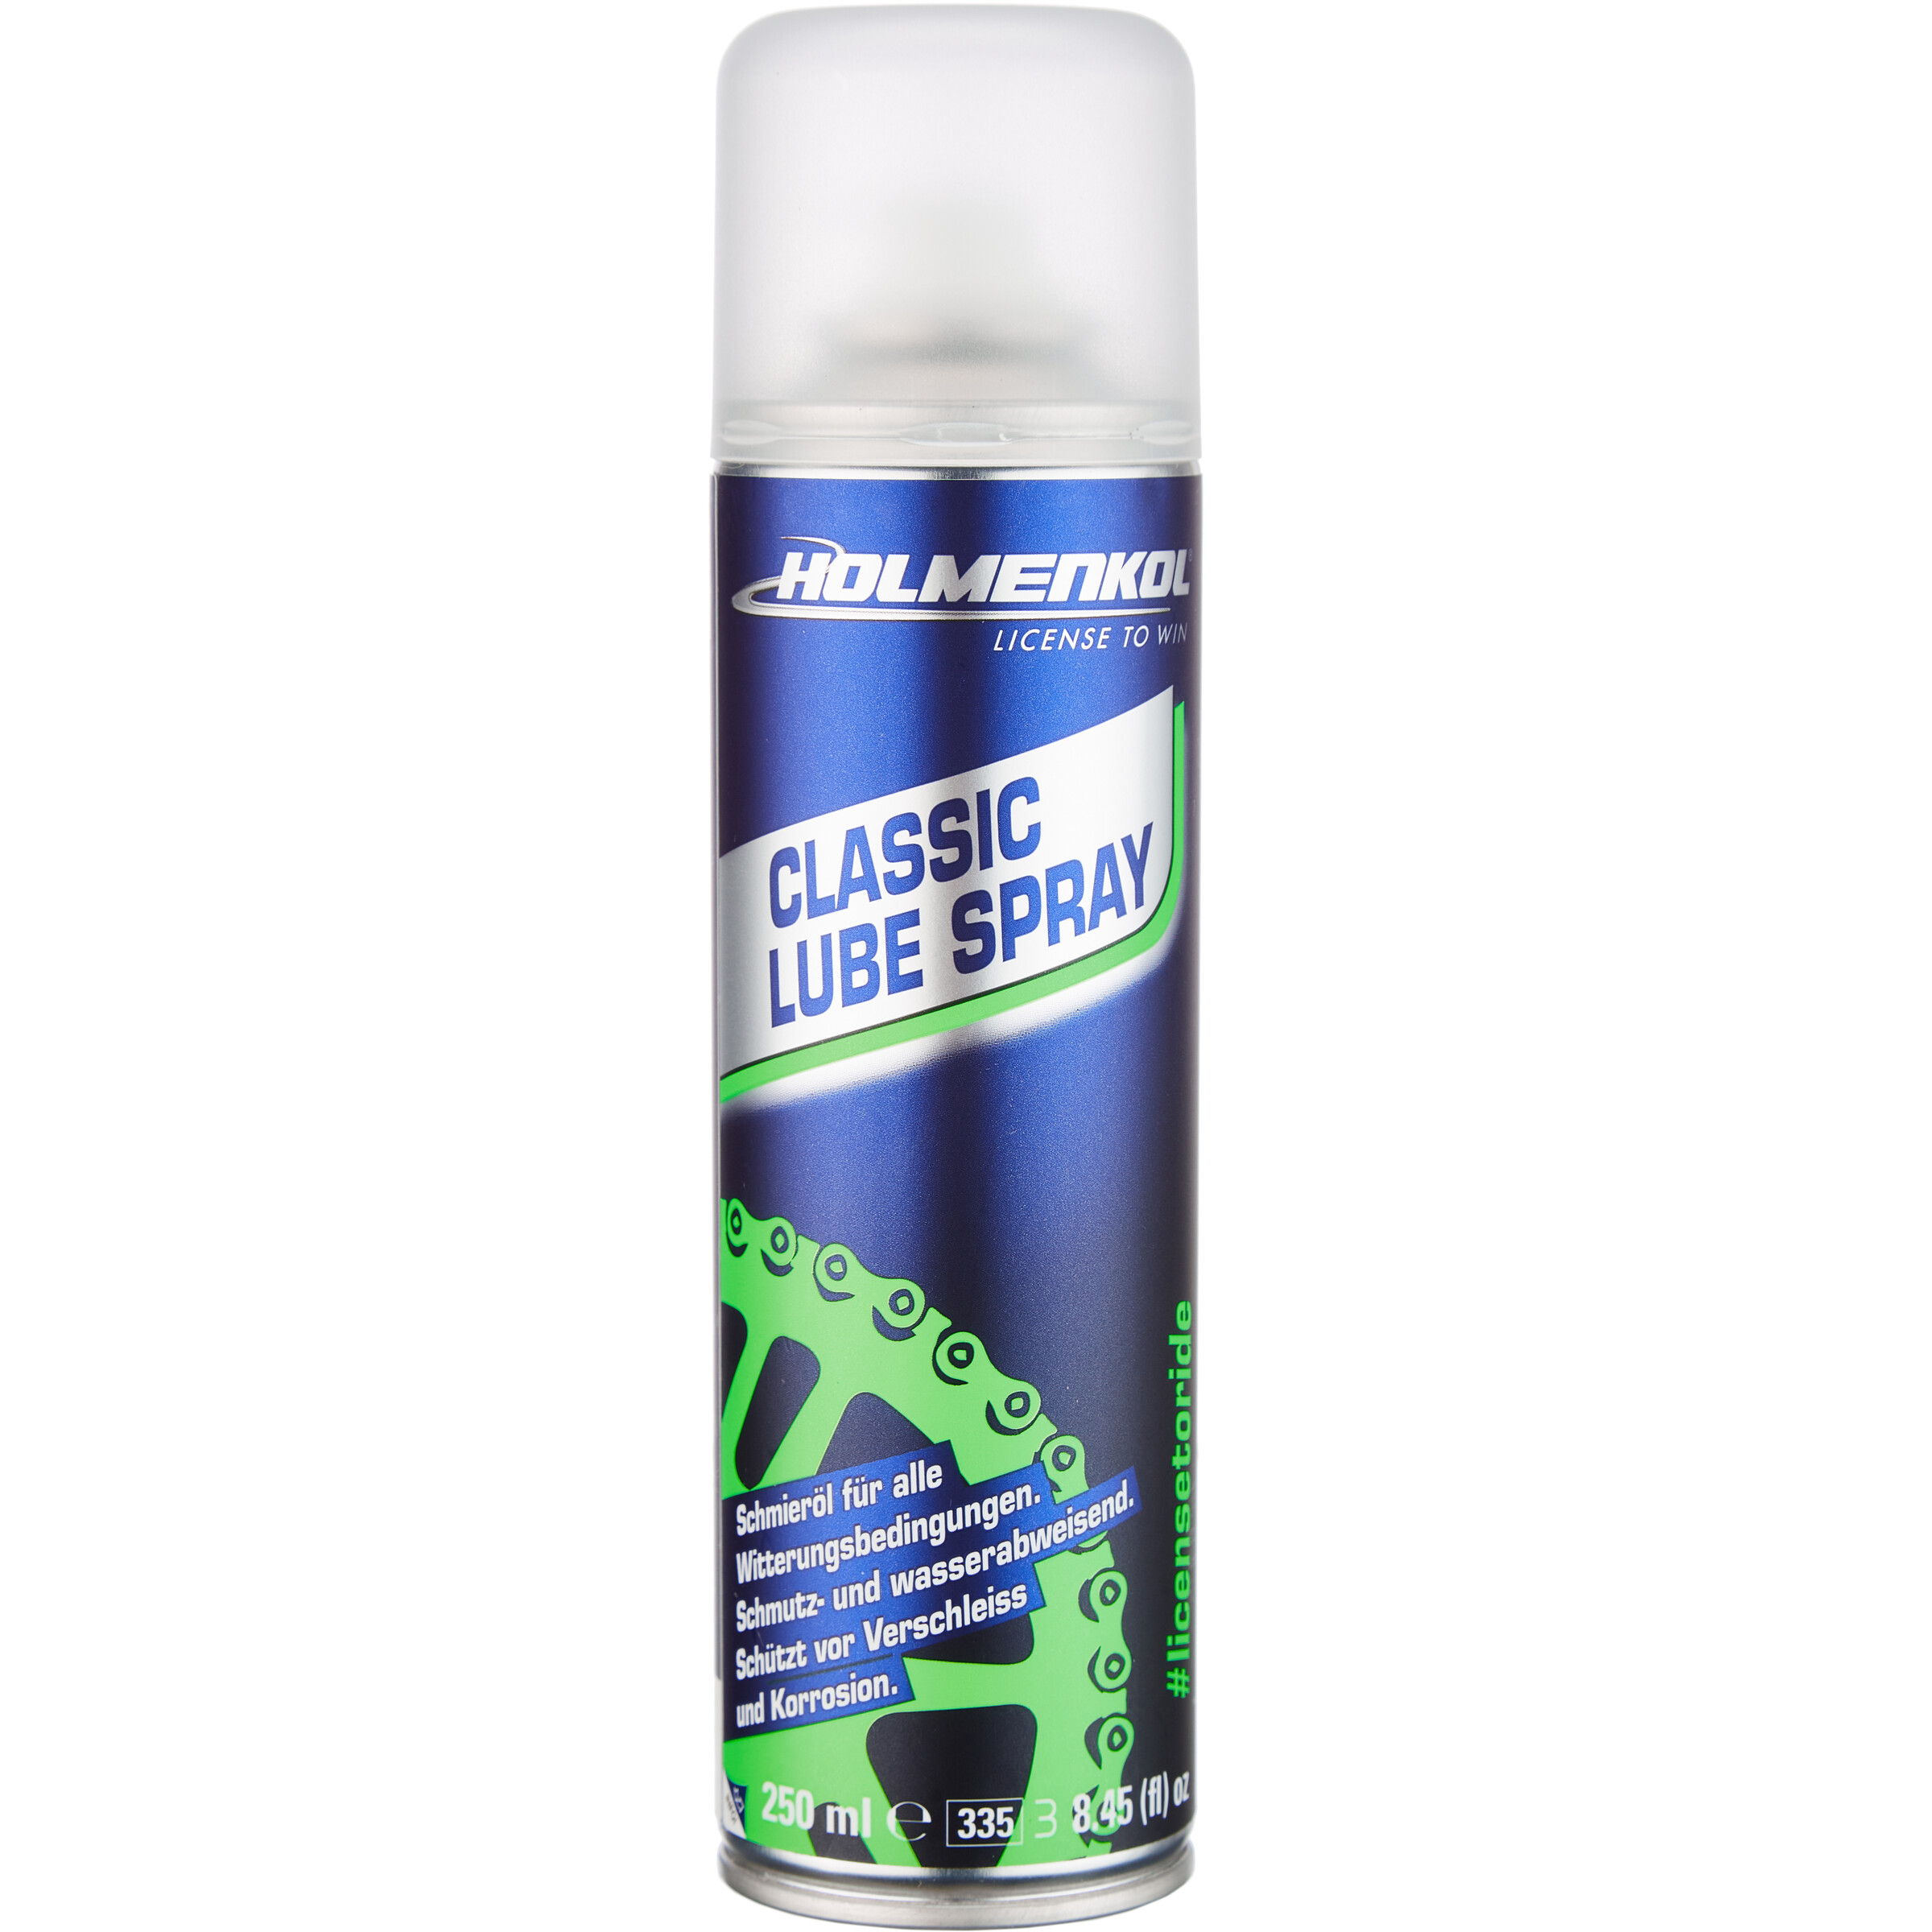 Classic Lube Spray 250ml